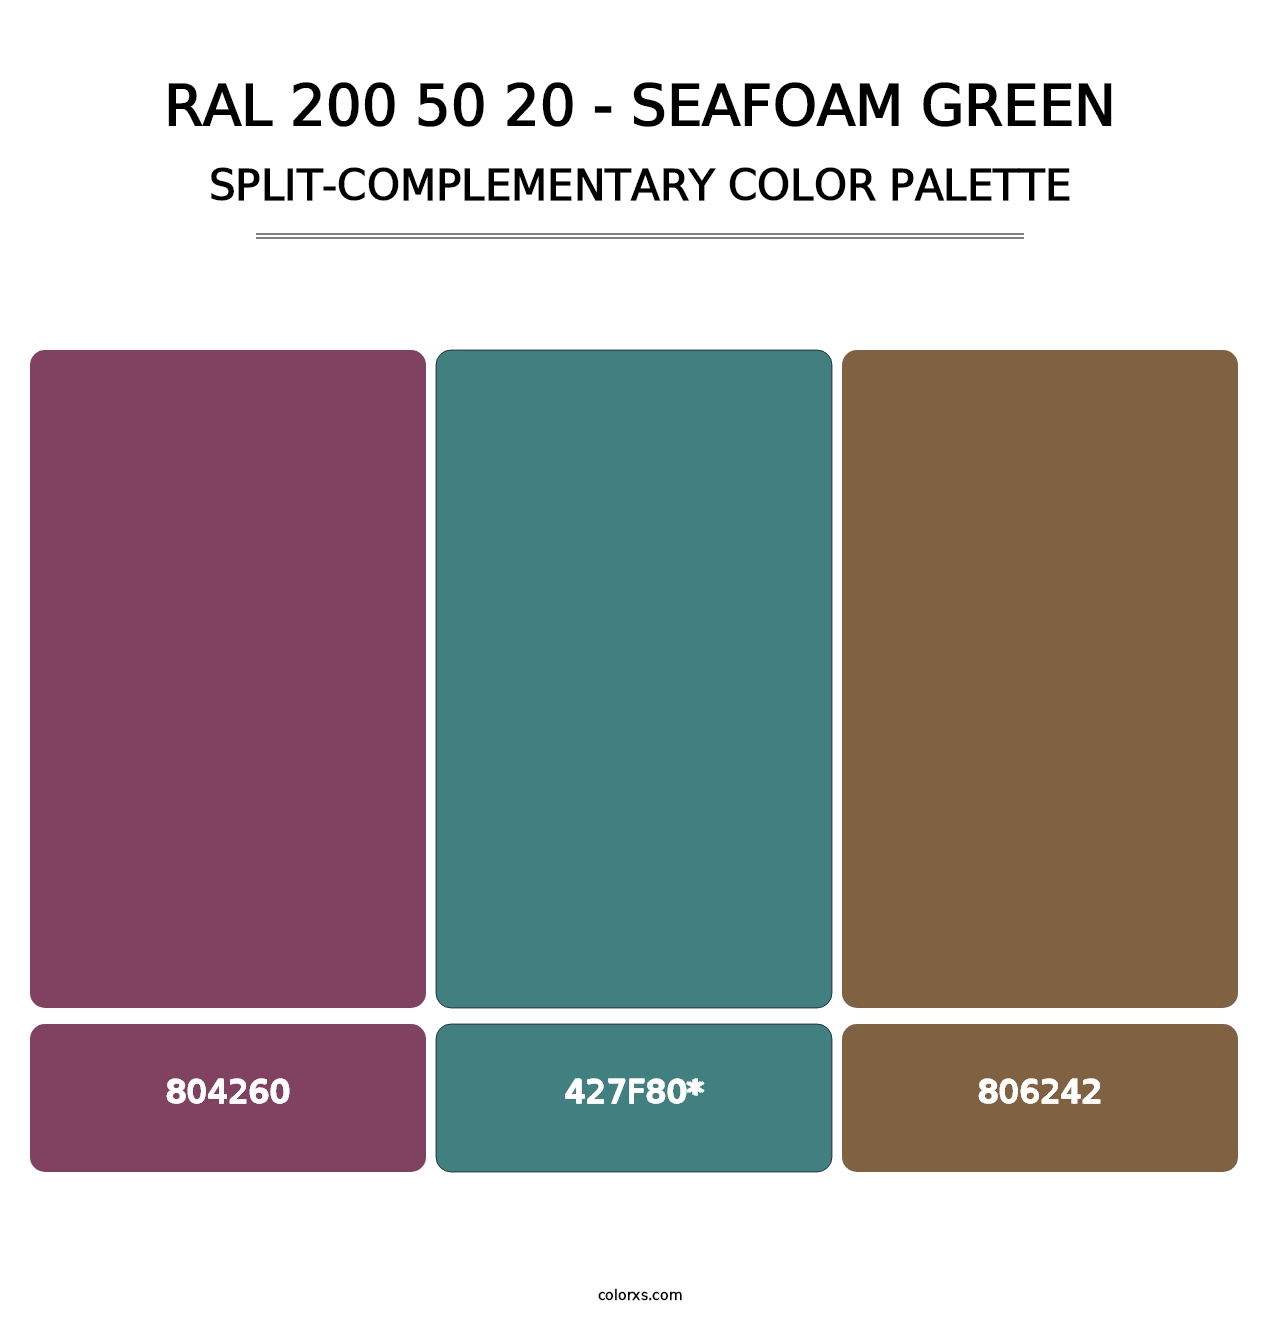 RAL 200 50 20 - Seafoam Green - Split-Complementary Color Palette